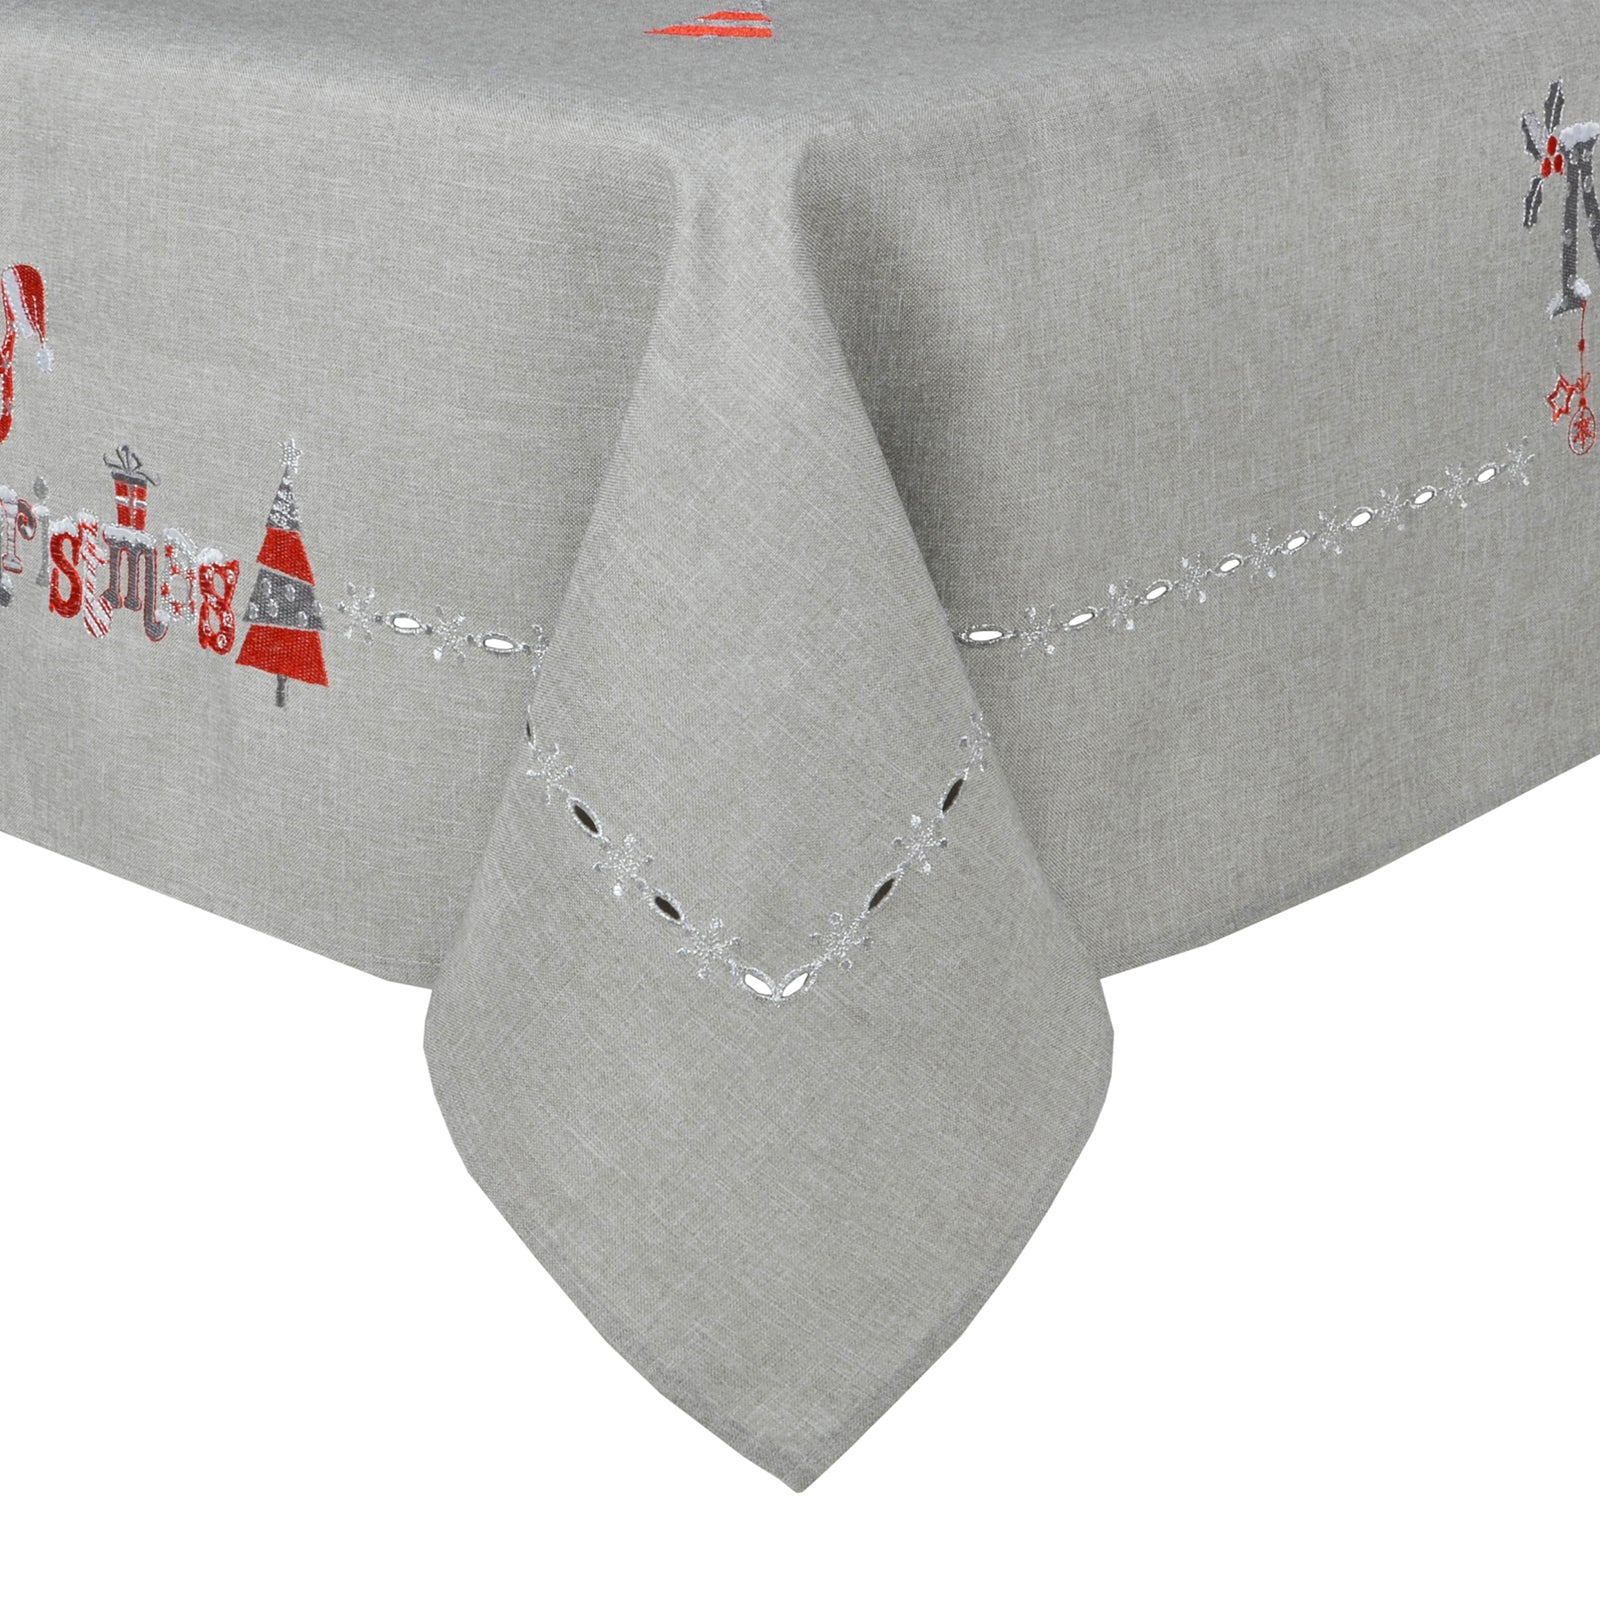 Mr Crimbo Grey Merry Christmas Embroidered Tablecloth/Napkin - MrCrimbo.co.uk -XS5850 - 52 x 70" -christmas napkins